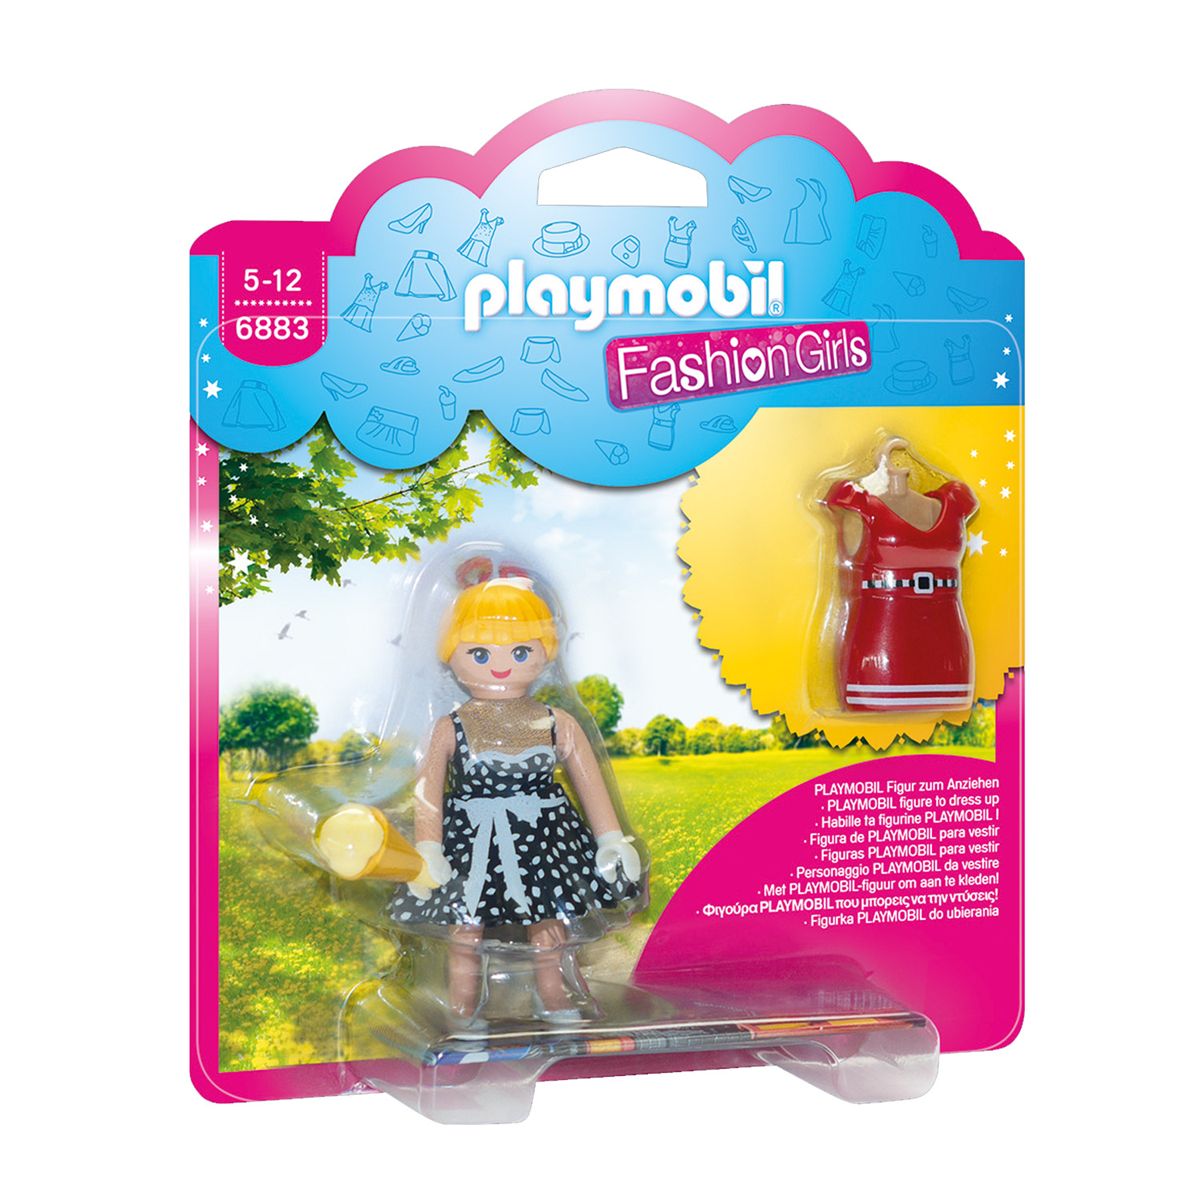 playmobil fashion girl